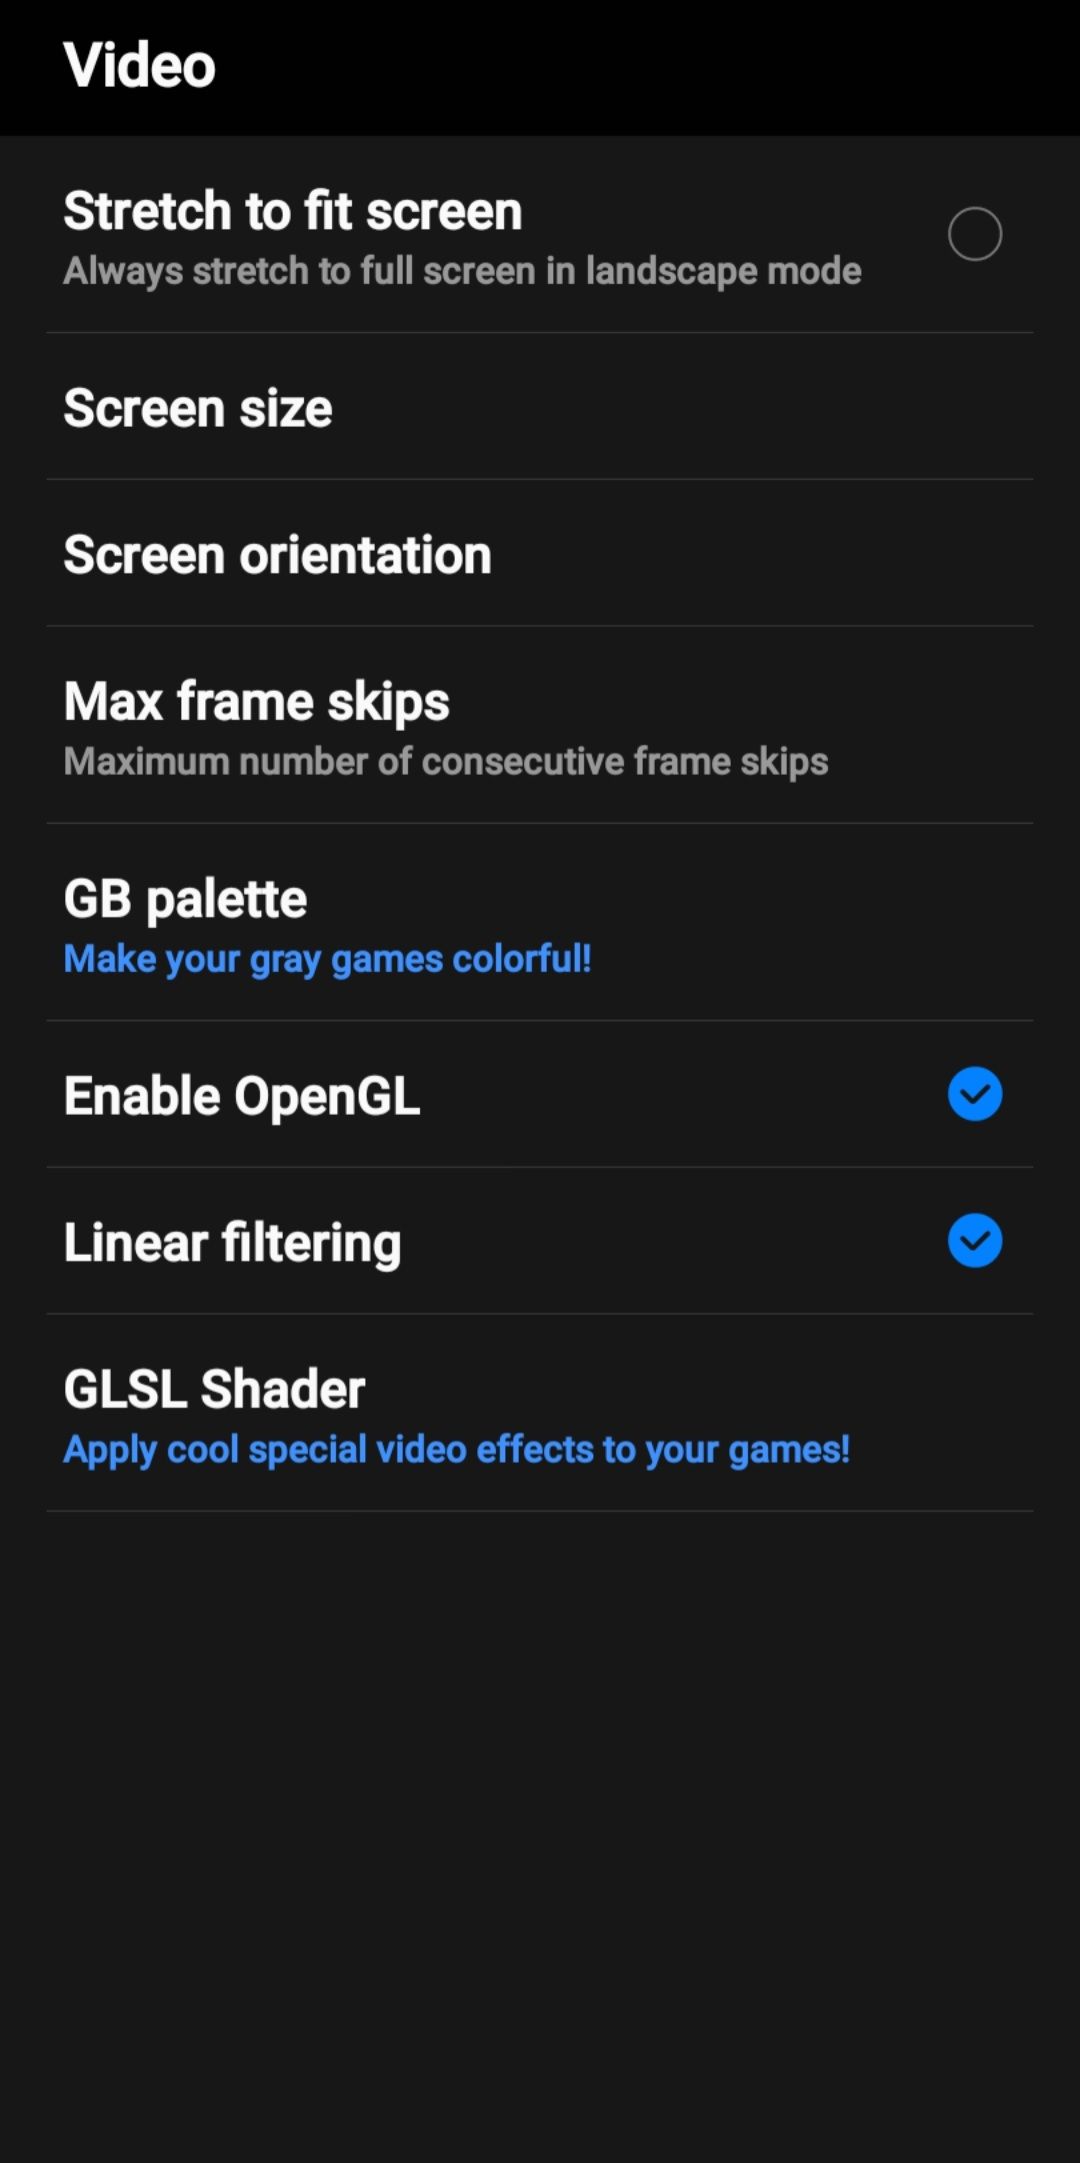 My OldBoy! screenshot options menu